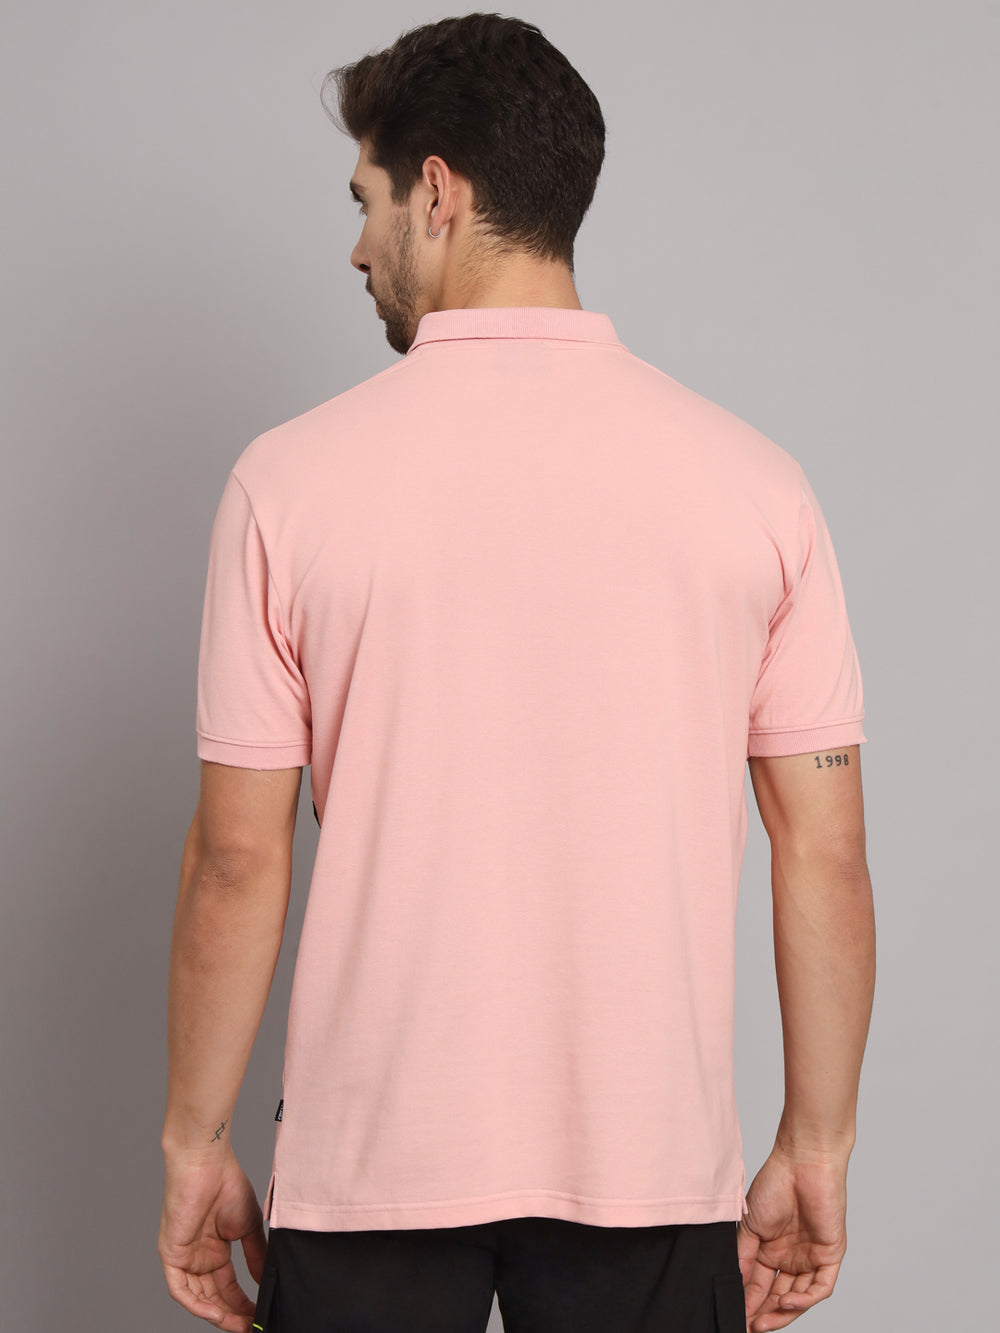 GRIFFEL Men's Pink Cotton Polo T-shirt - griffel